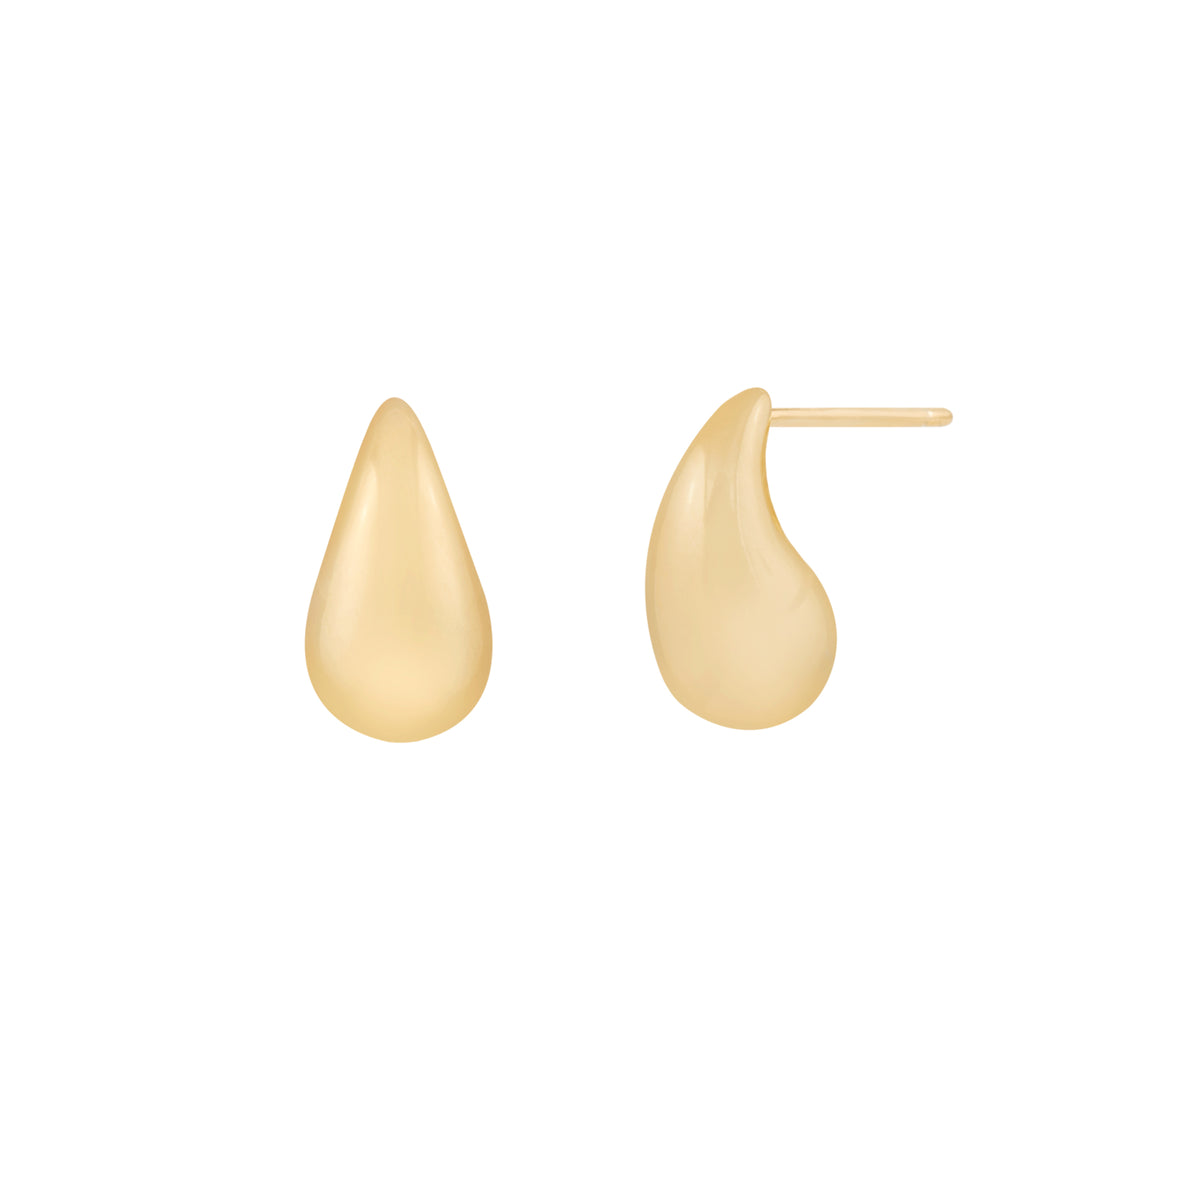 Mon Amour Earrings - Gold Vermeil Mon Amour Earrings - Gold Vermeil